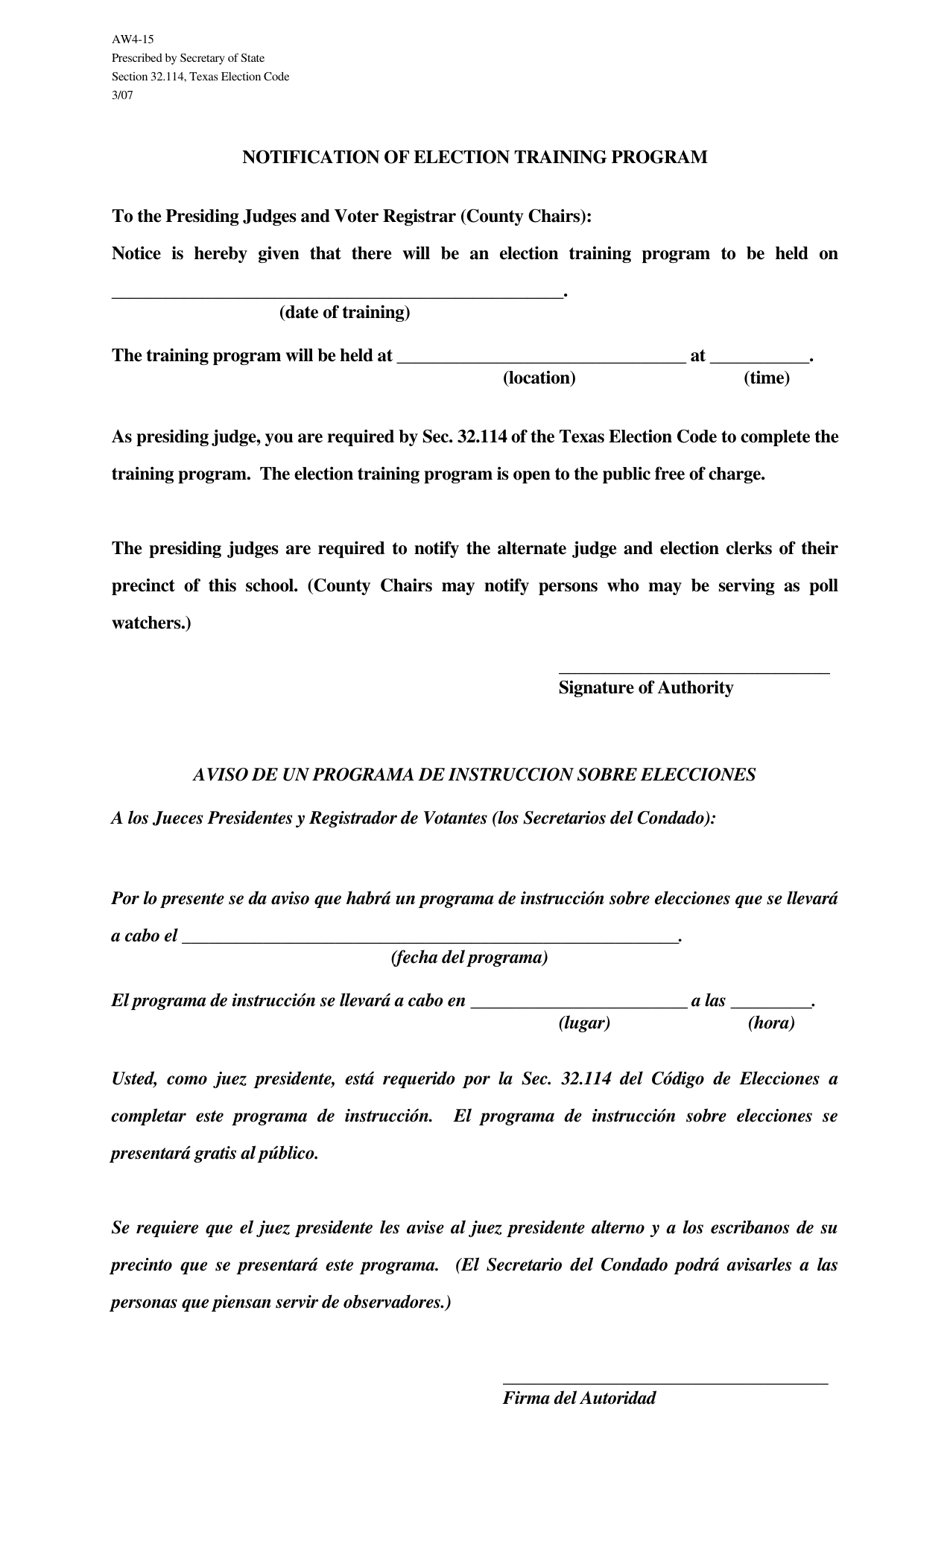 Form AW4-15 Notification of Election Training Program - Texas (English / Spanish), Page 1